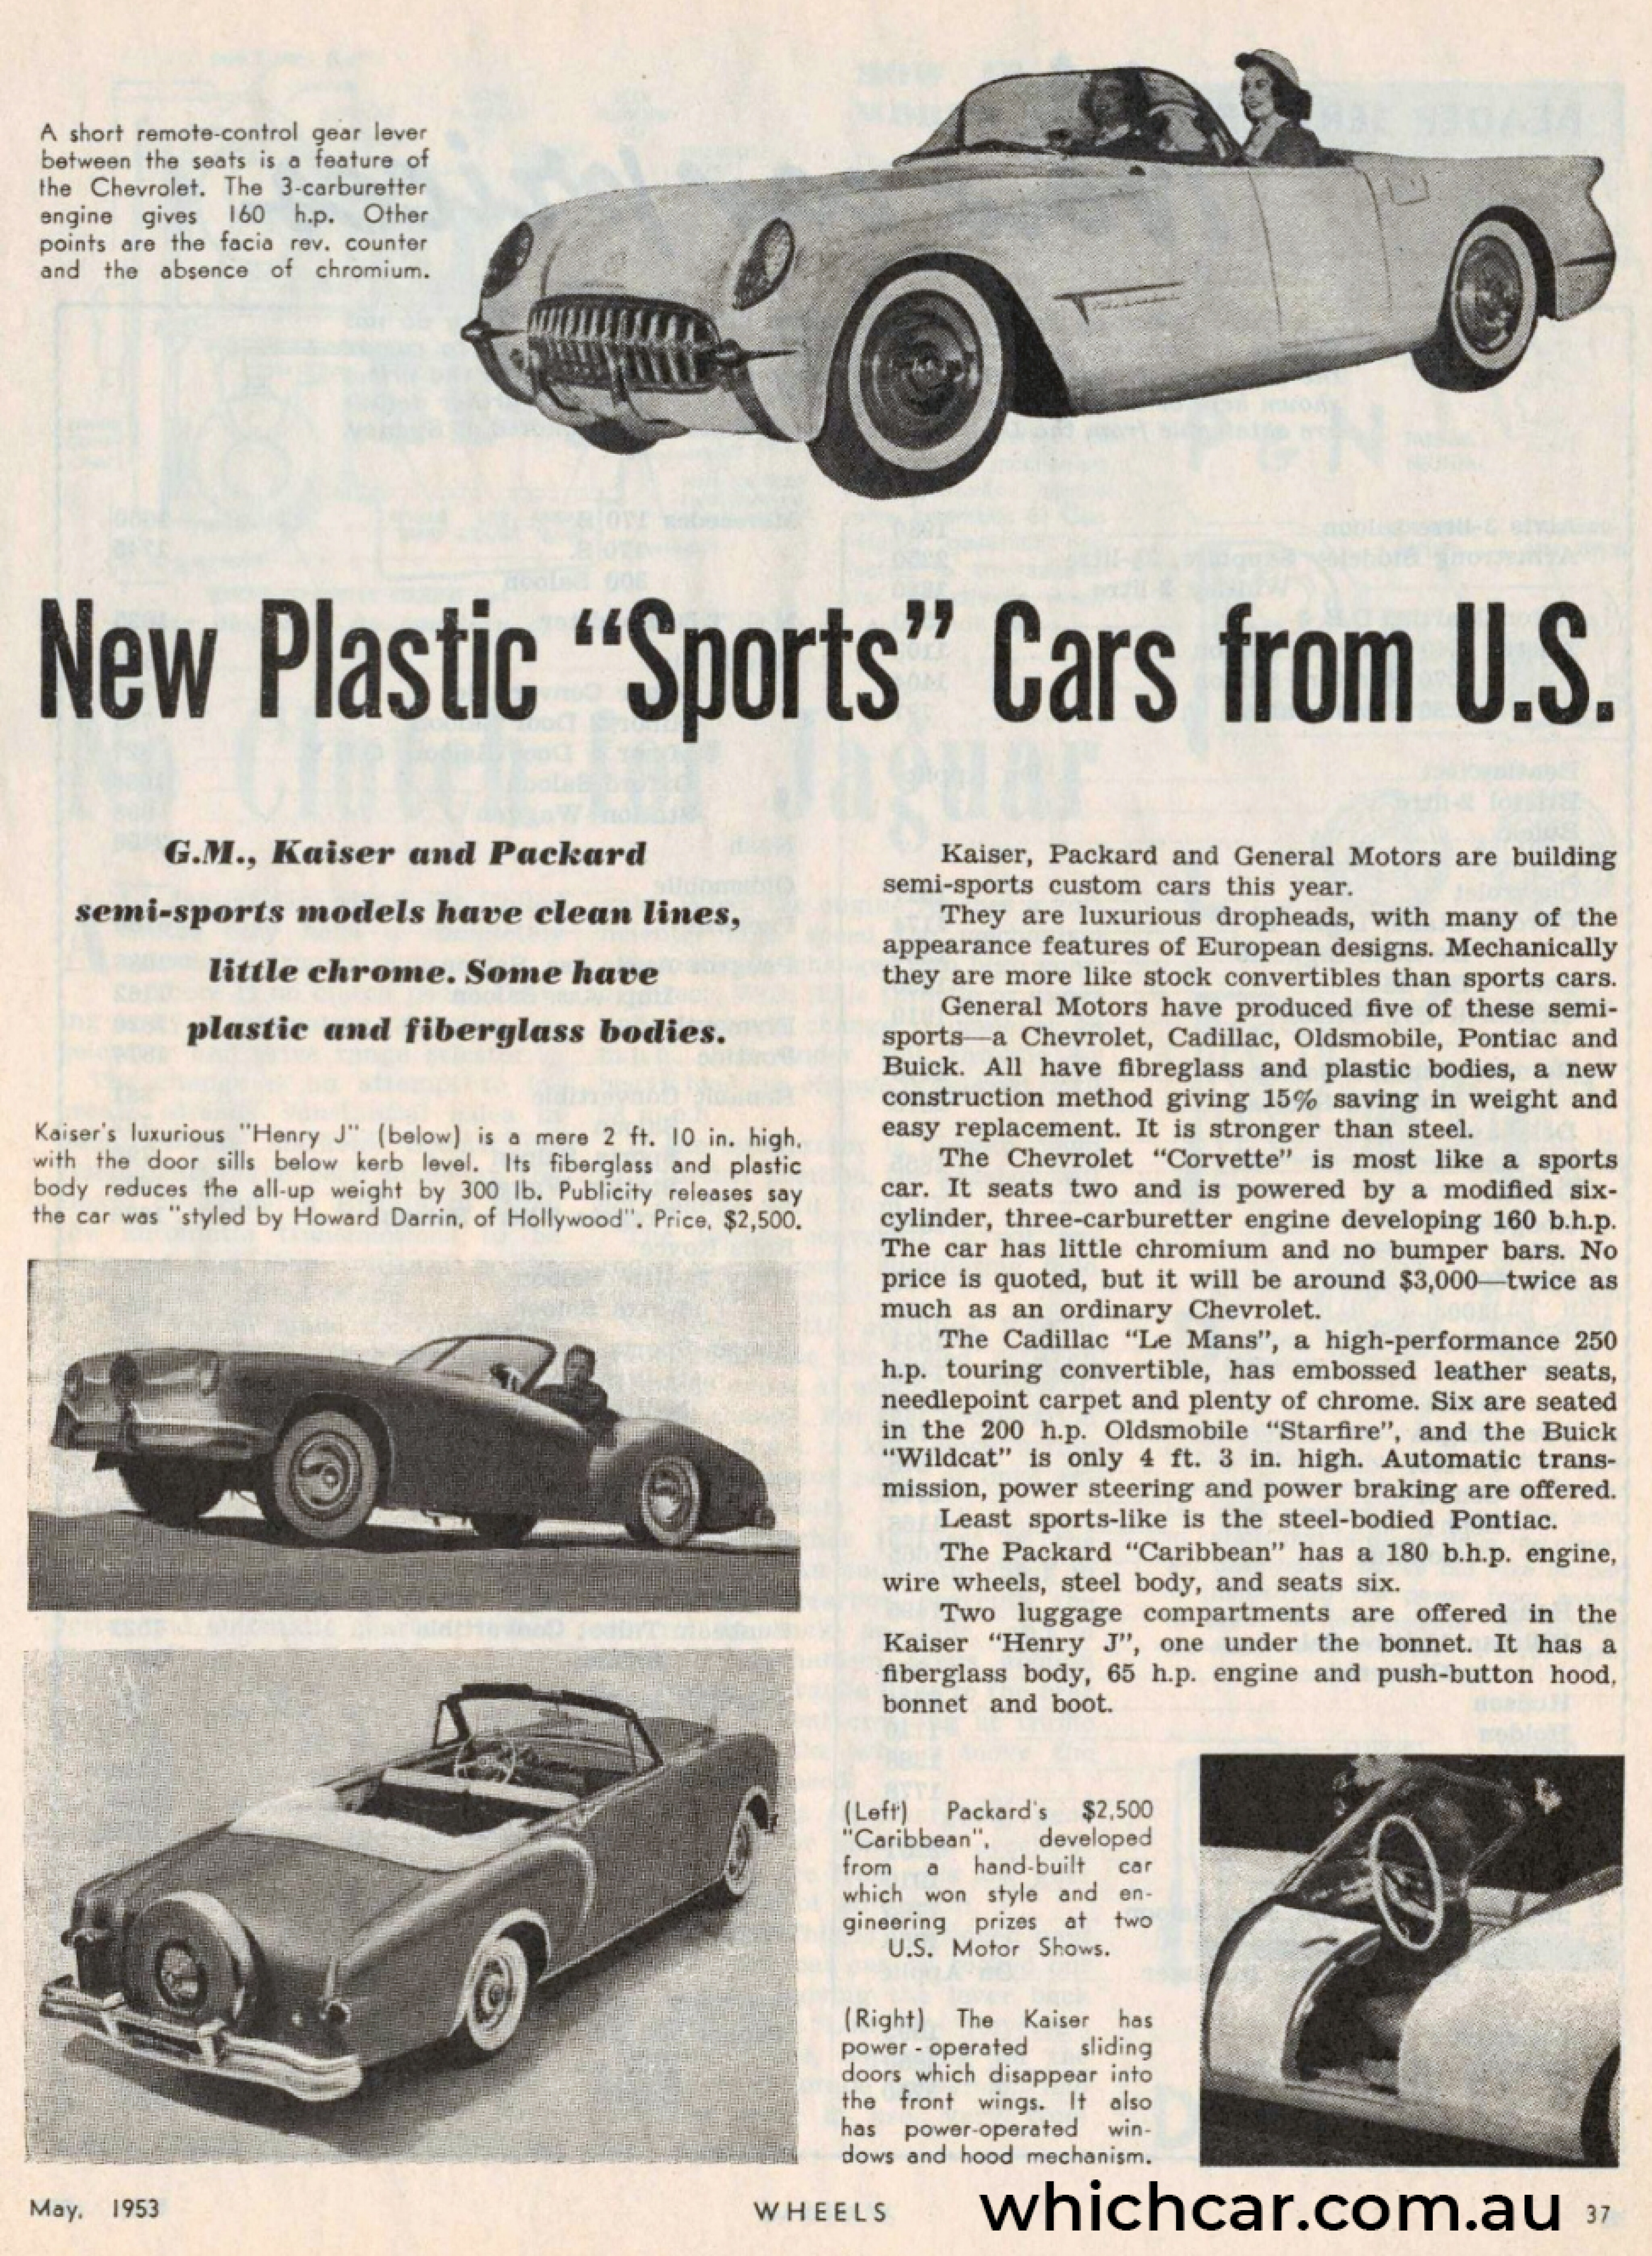 22731d83/wheels magazine issue 1 1953 corvette plastic sports cars jpg